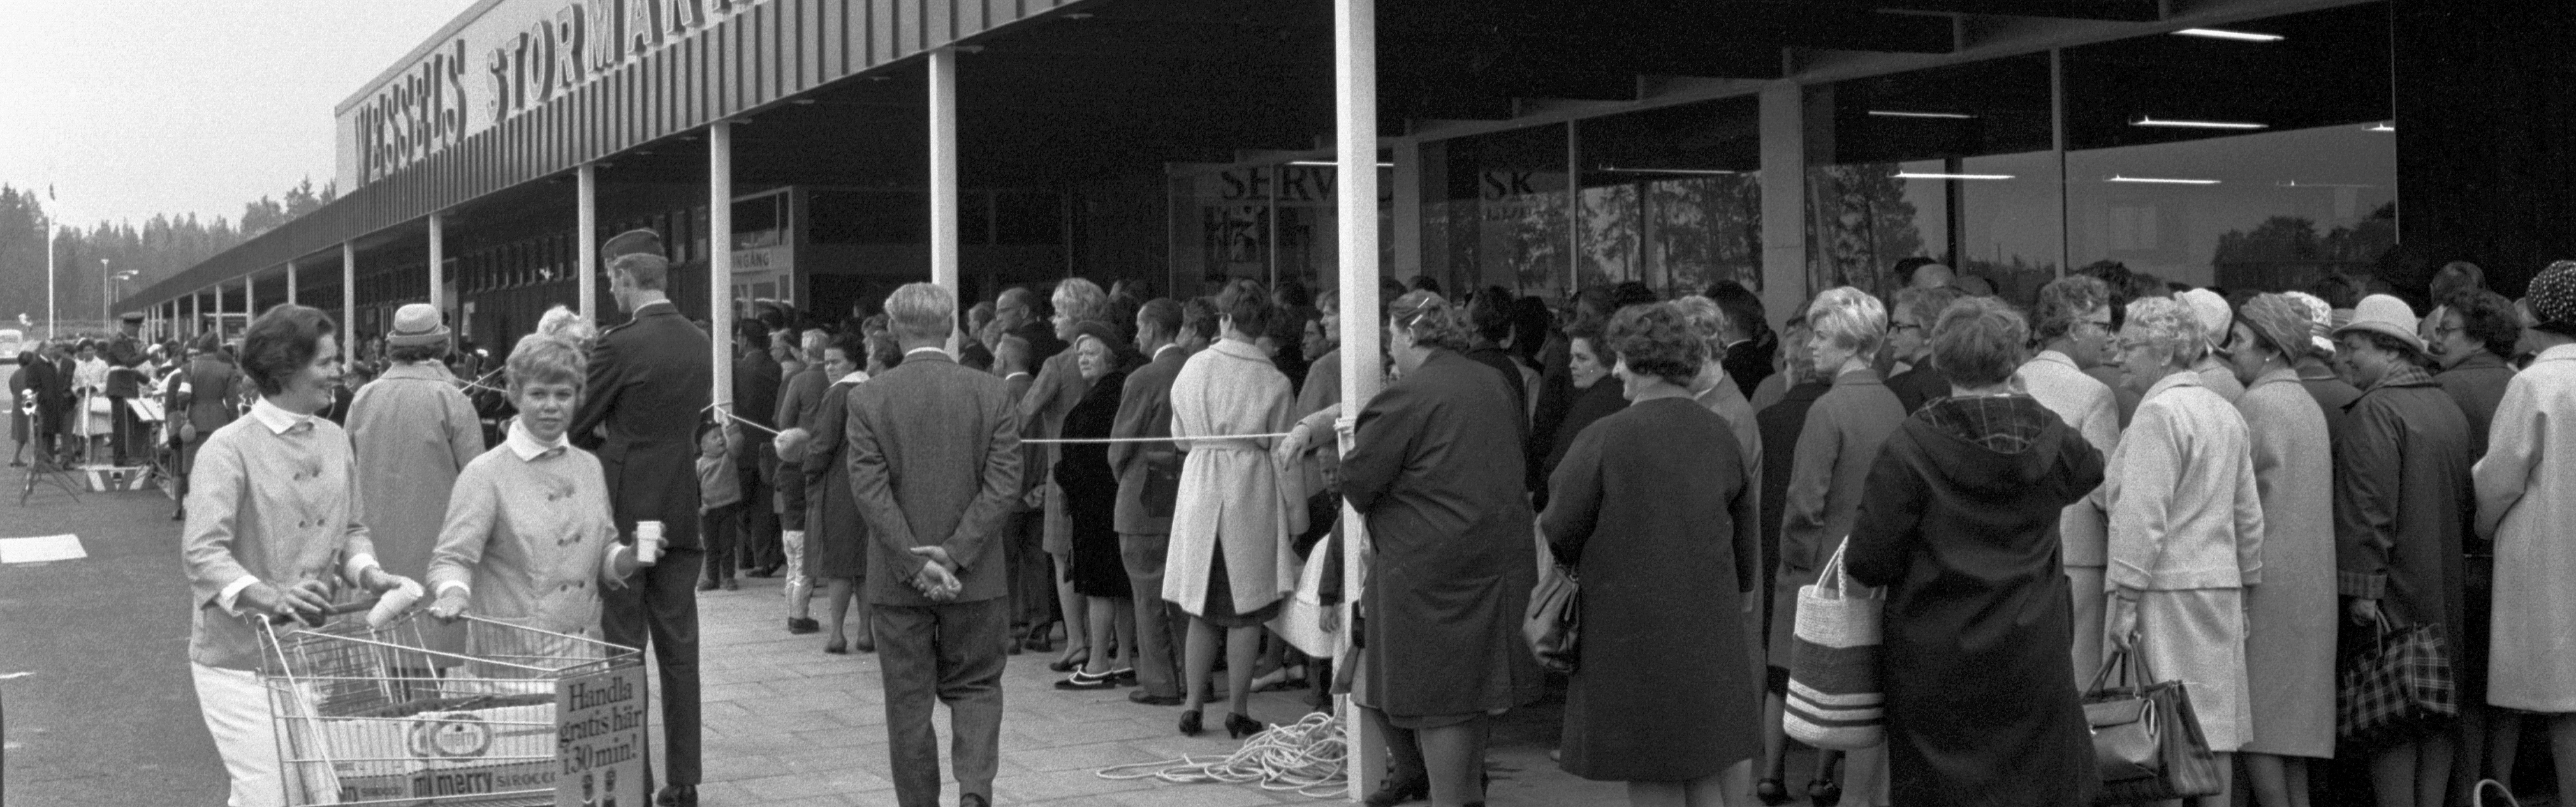 Wessels stormarknad. 16 september 1967.